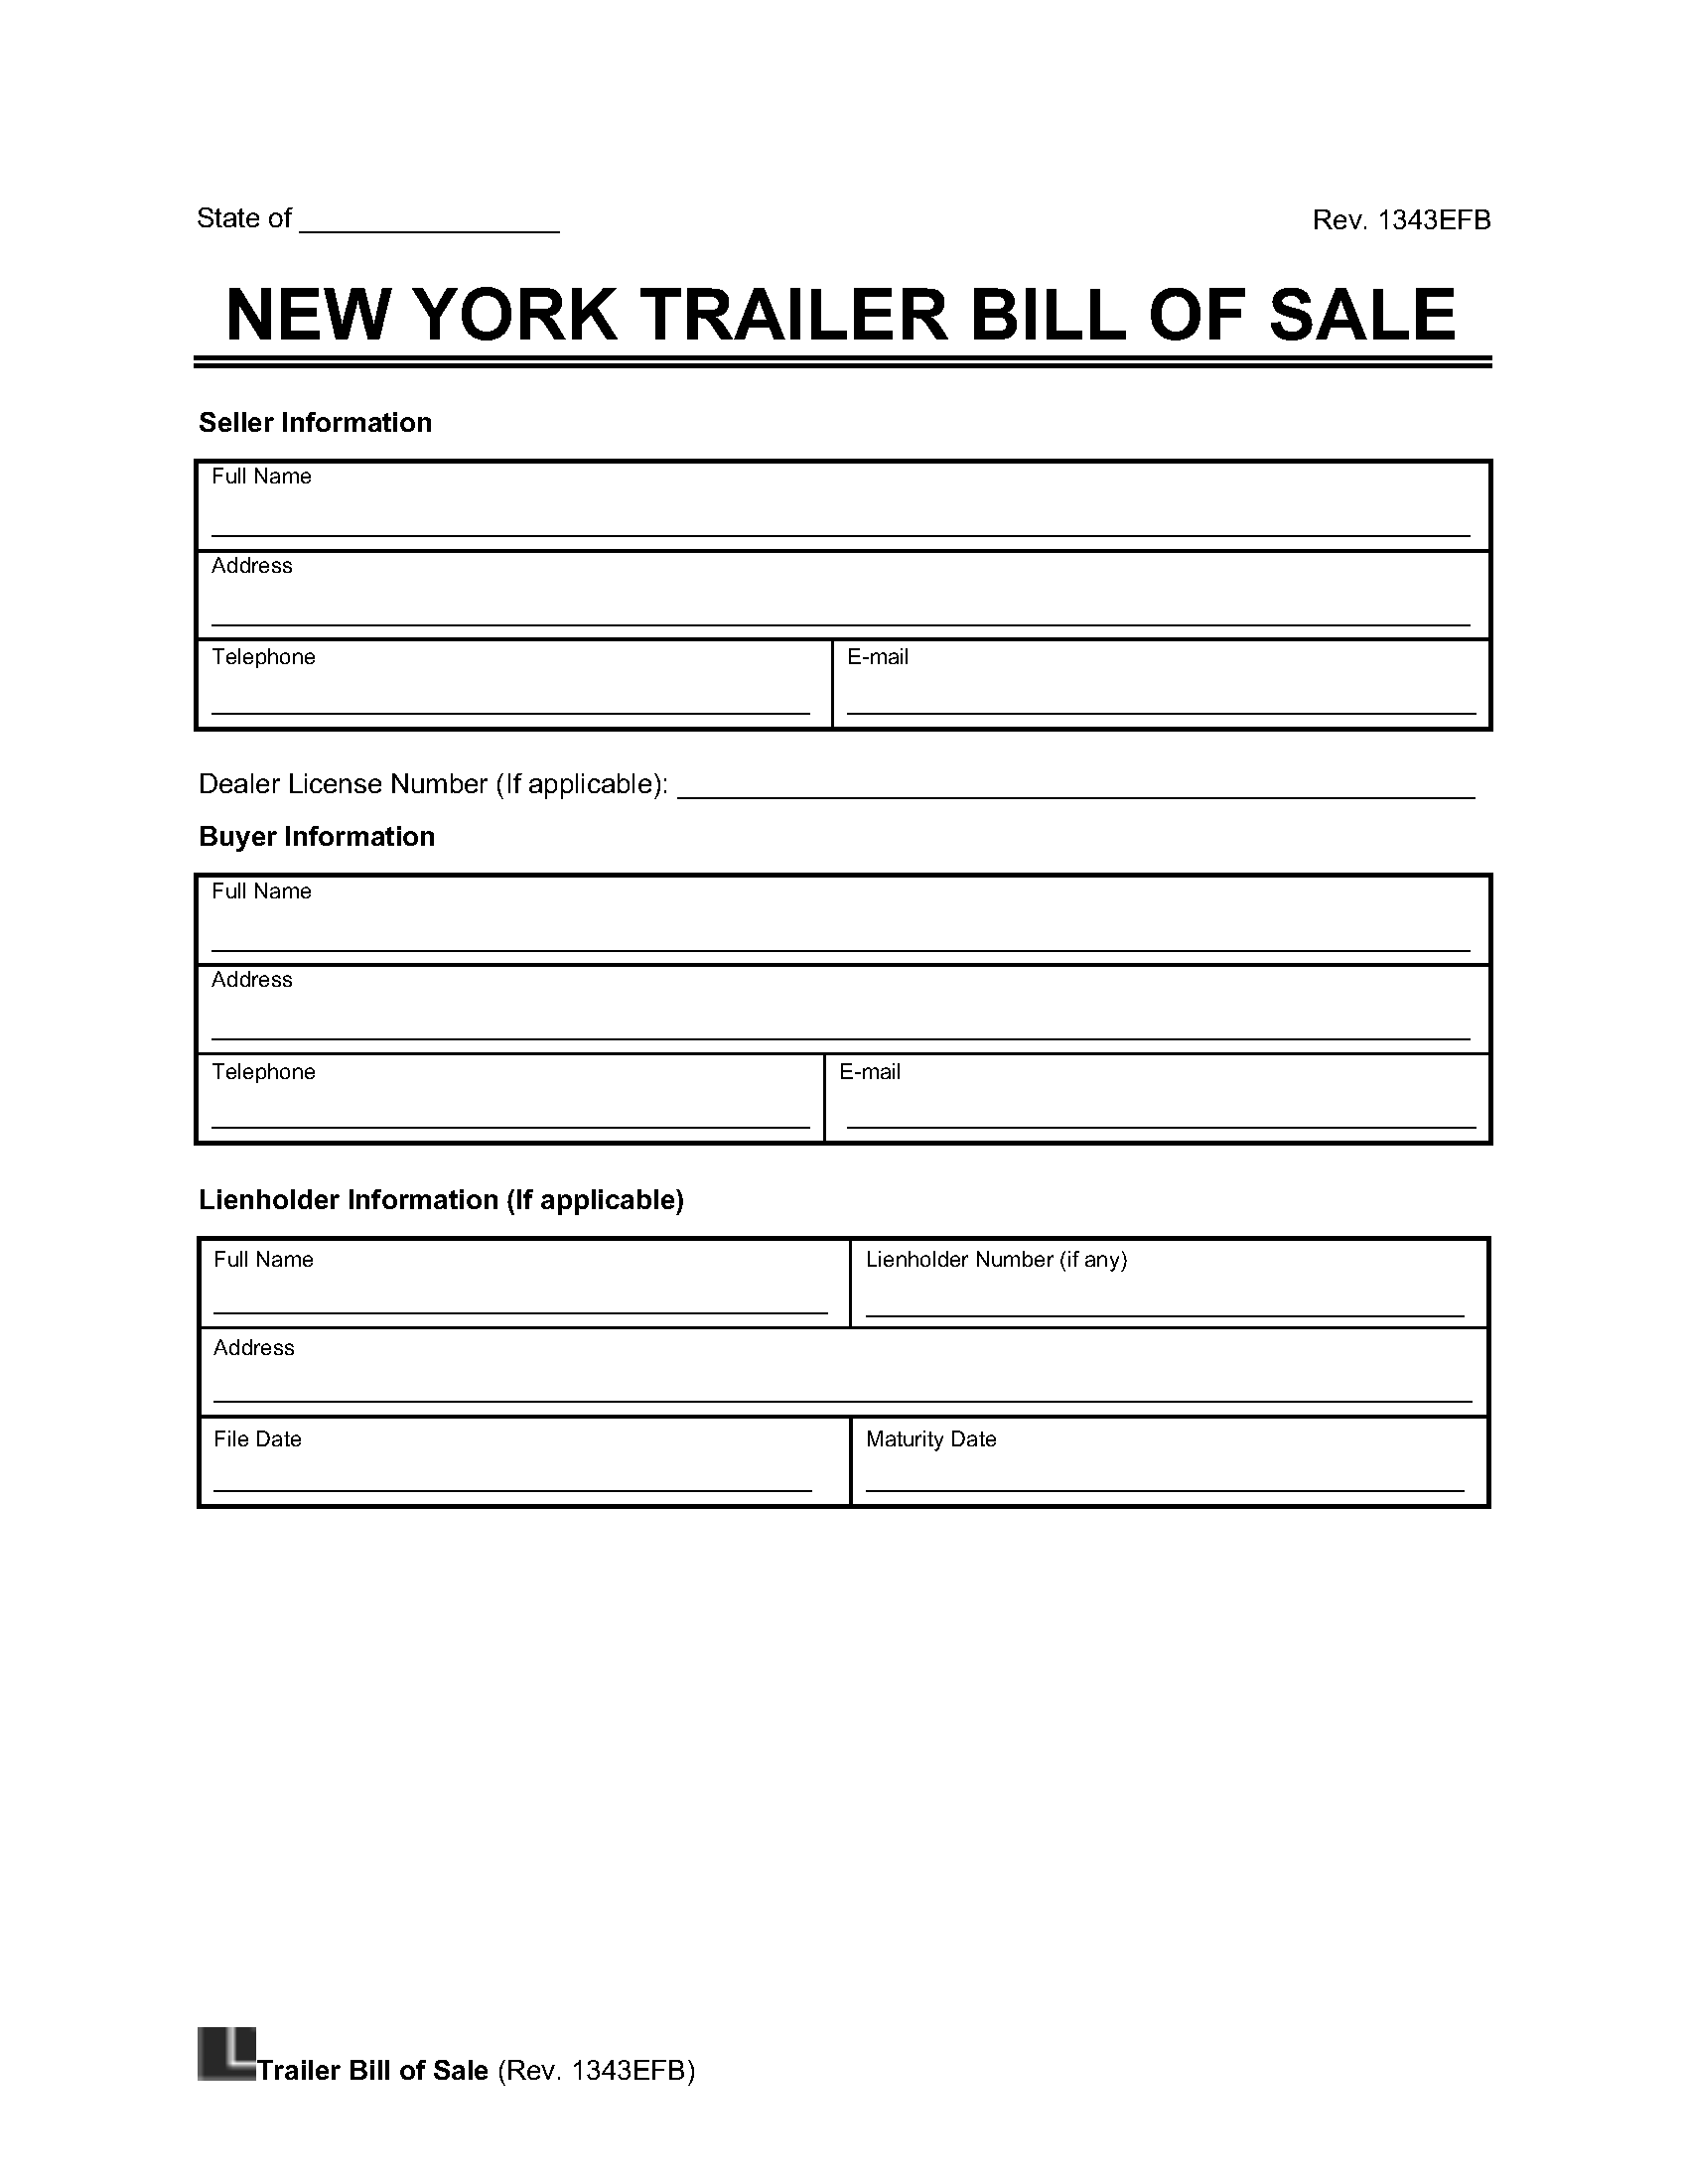 New York Trailer Bill of Sale screenshot